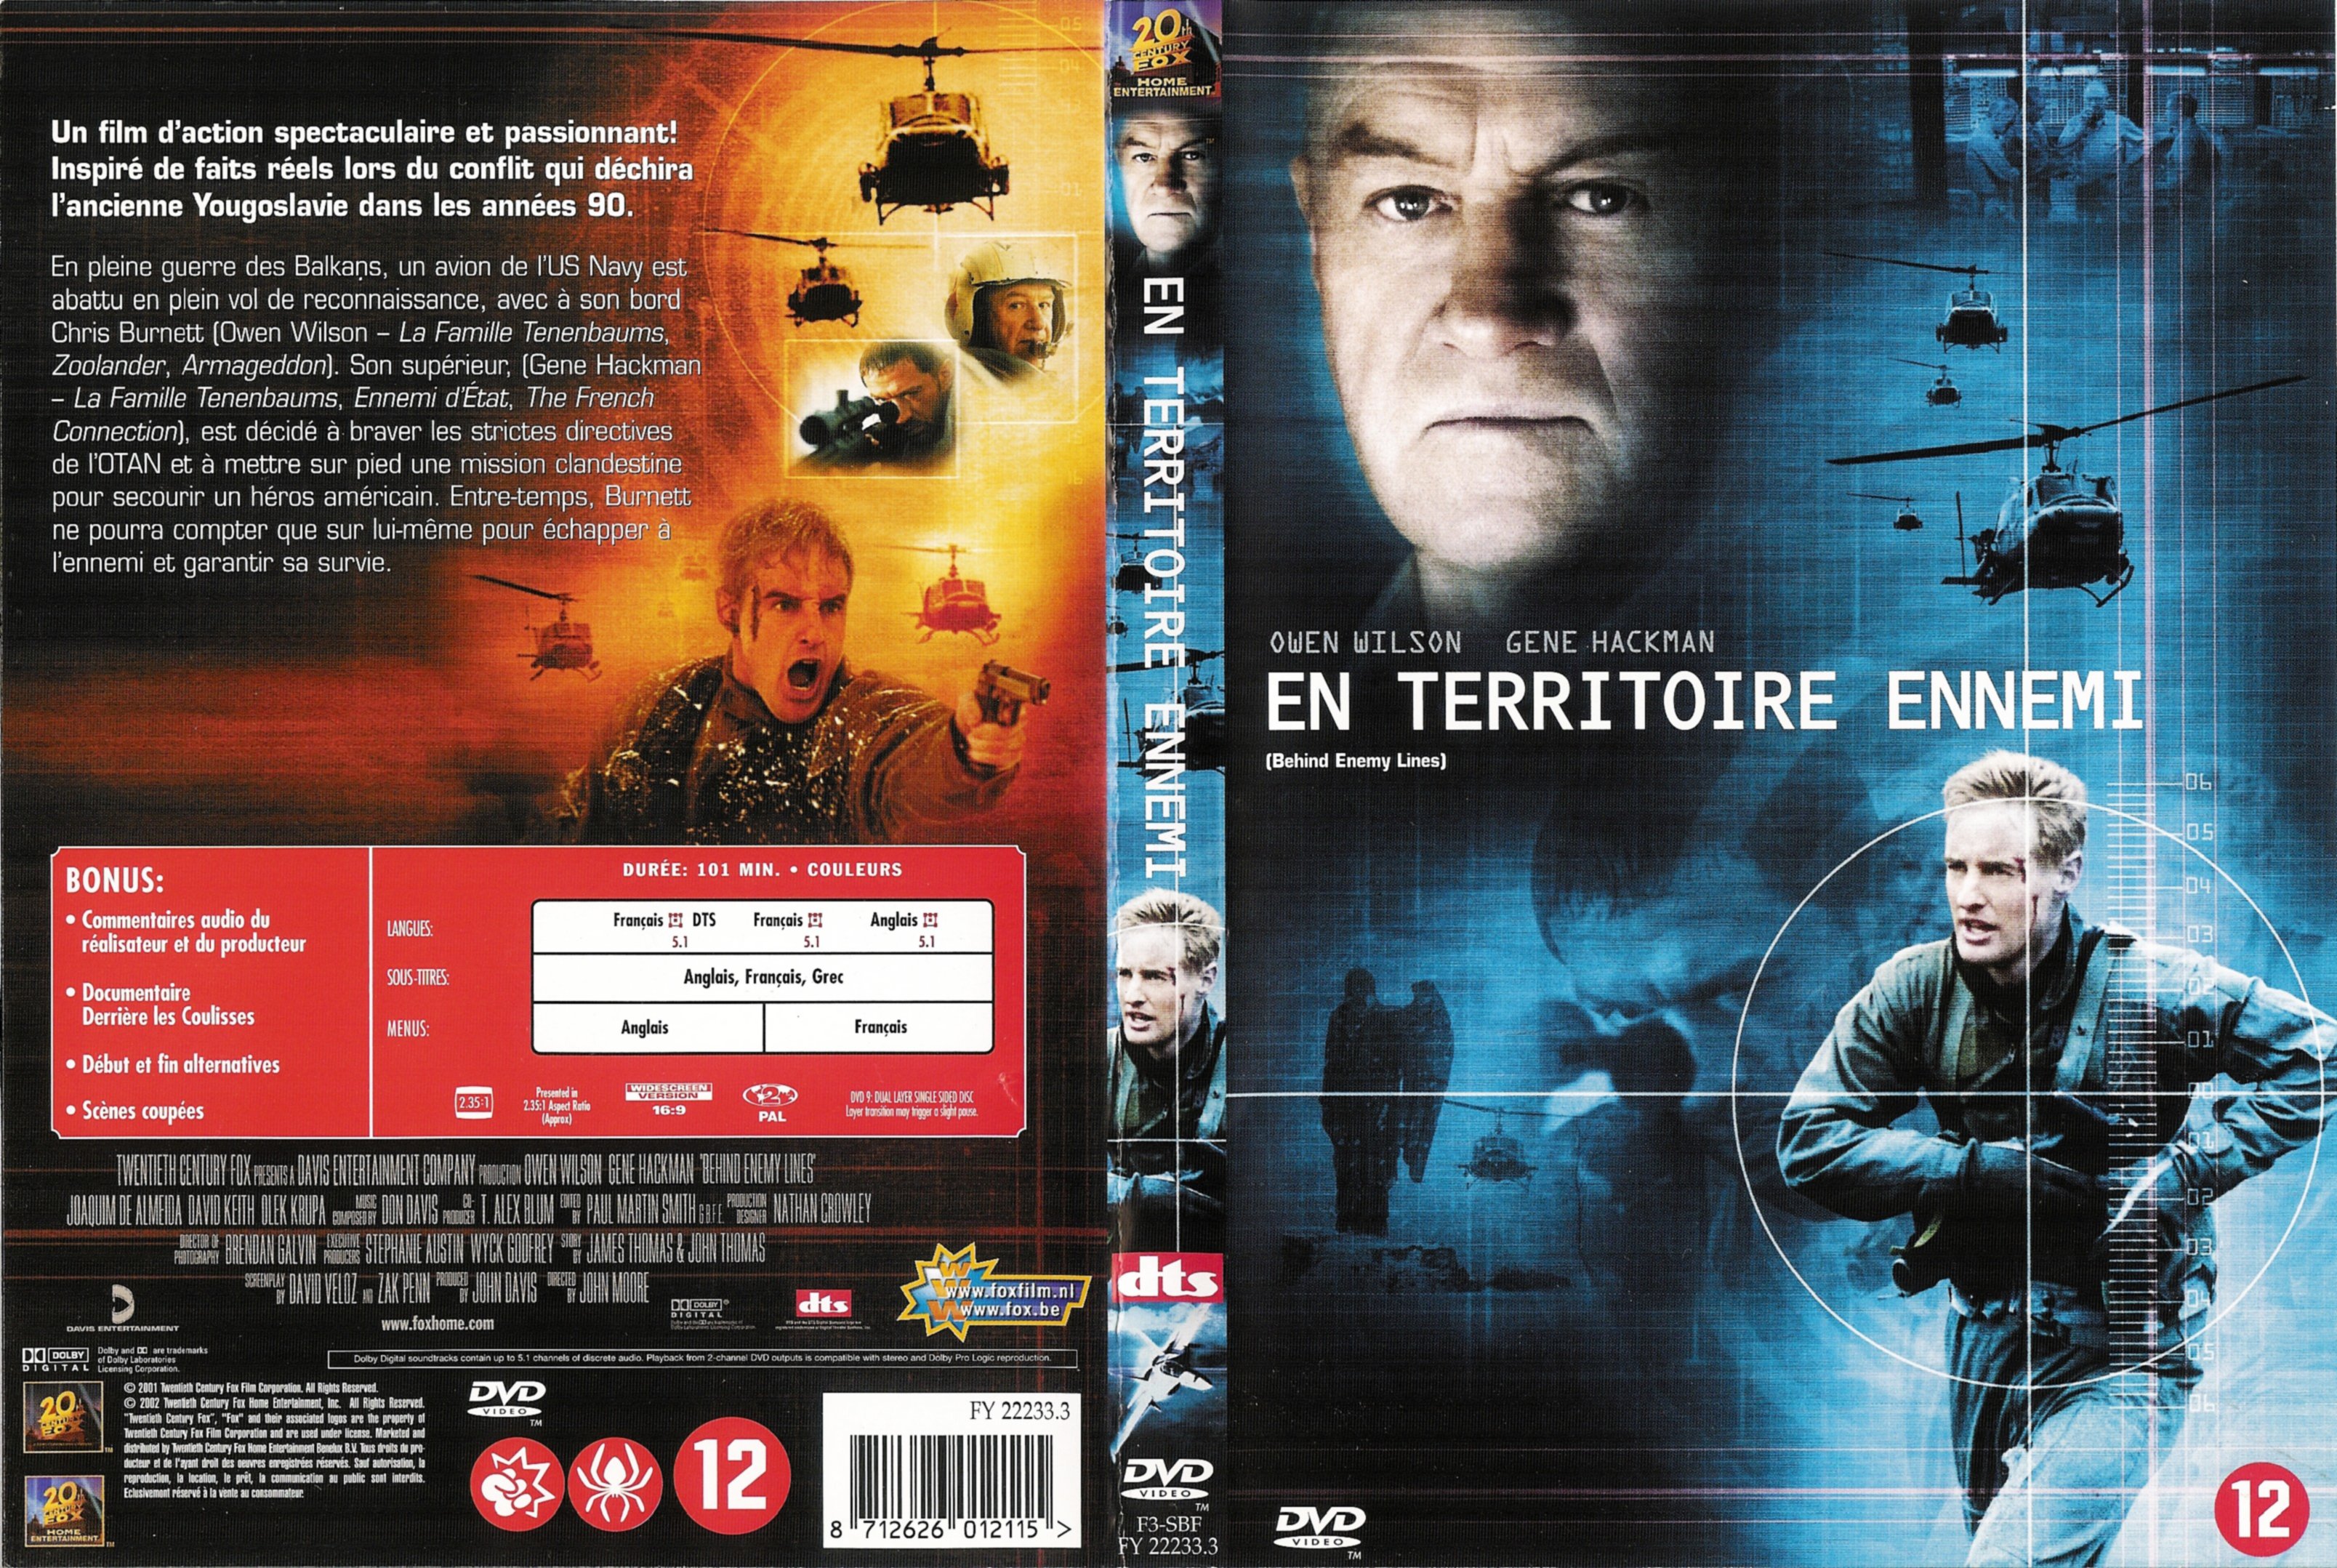 Jaquette DVD En territoire ennemi v3